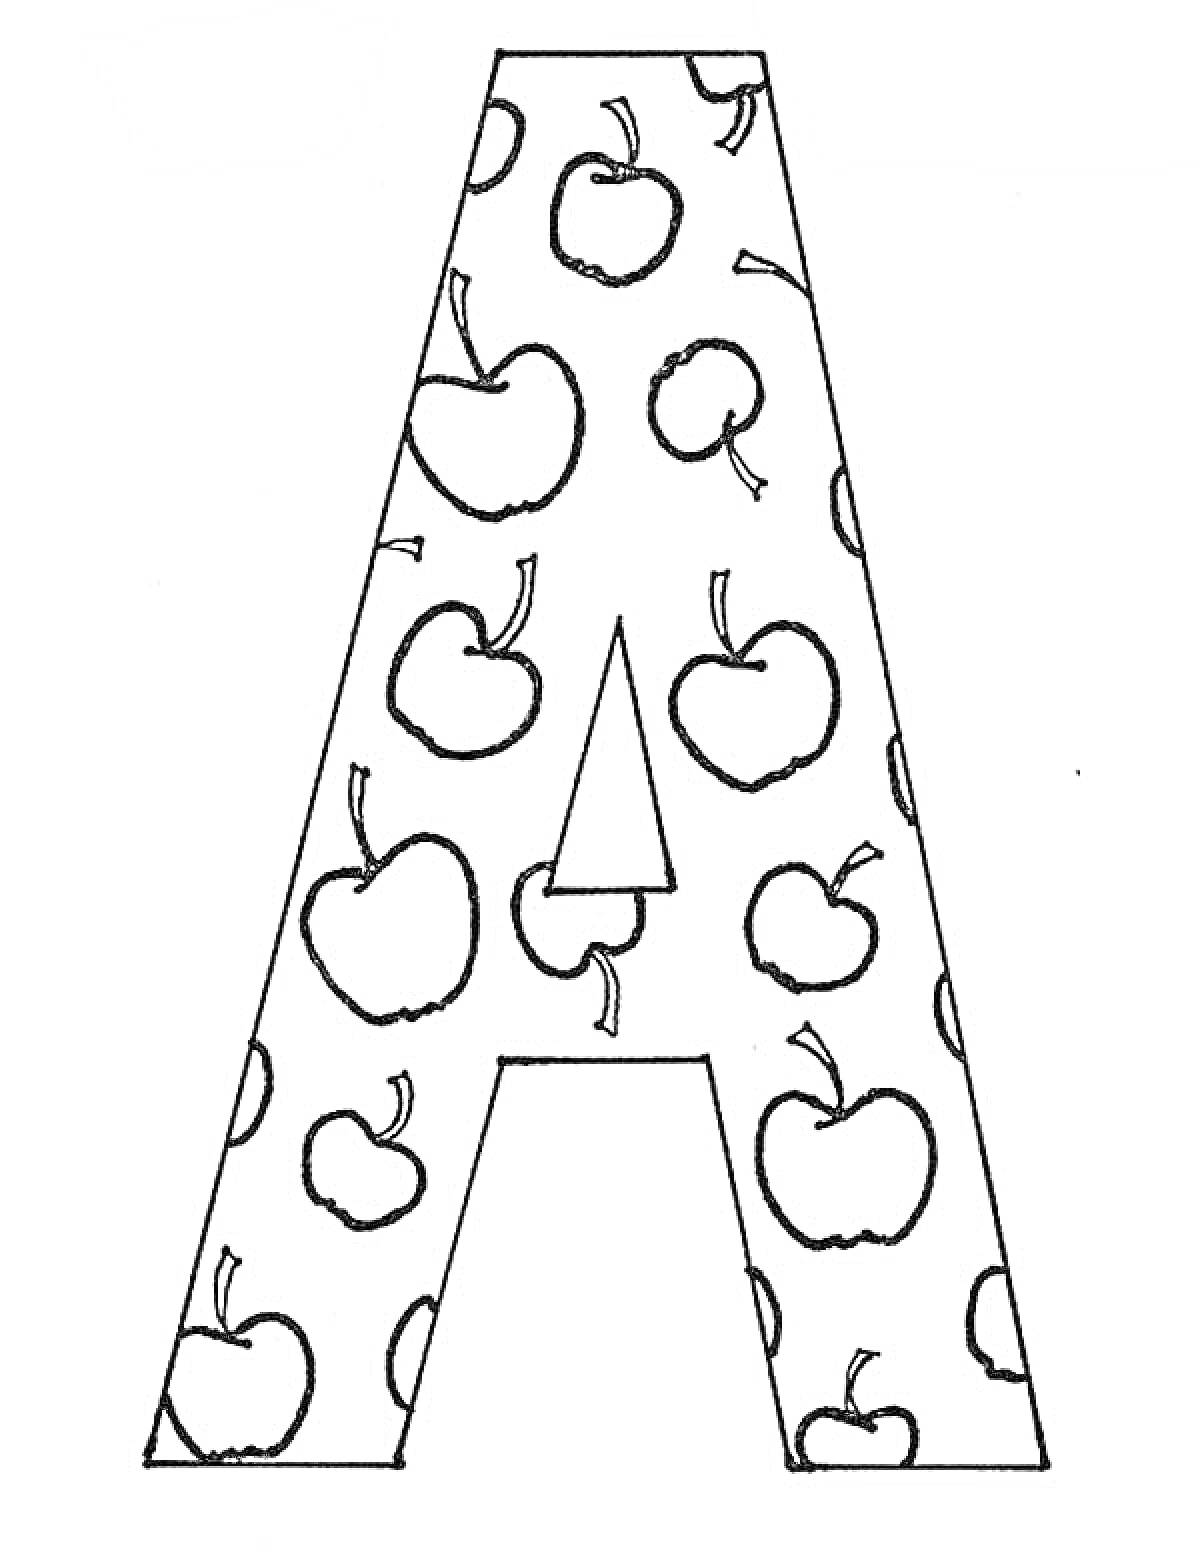 Раскраска Буква А с рисунками яблок